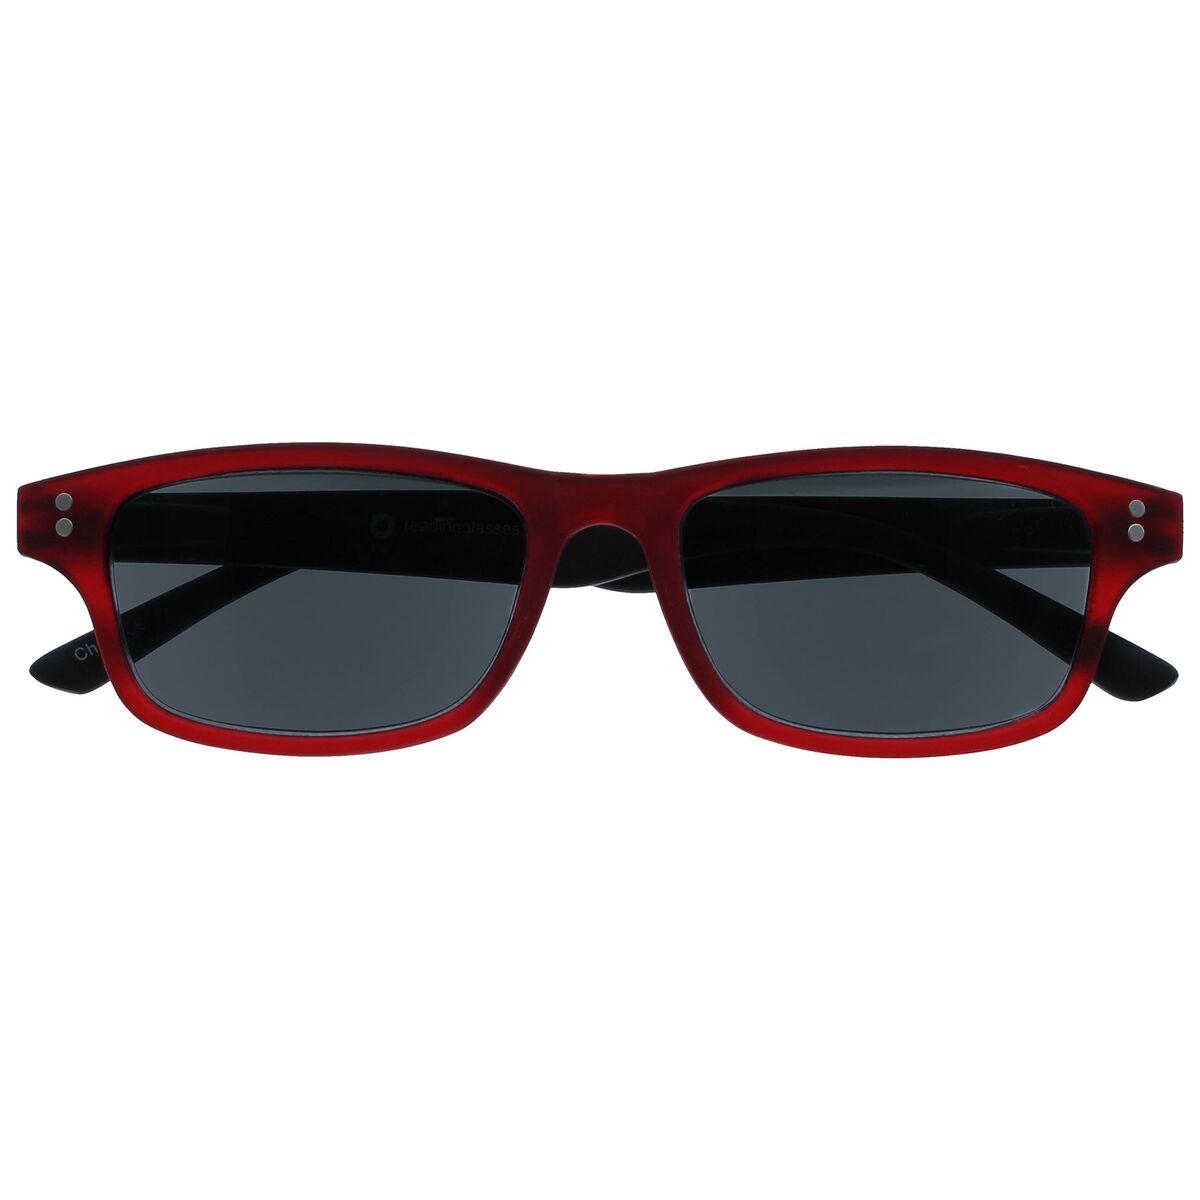 Unisex Sunglasses Red +2,50 UV400 (Refurbished A+)